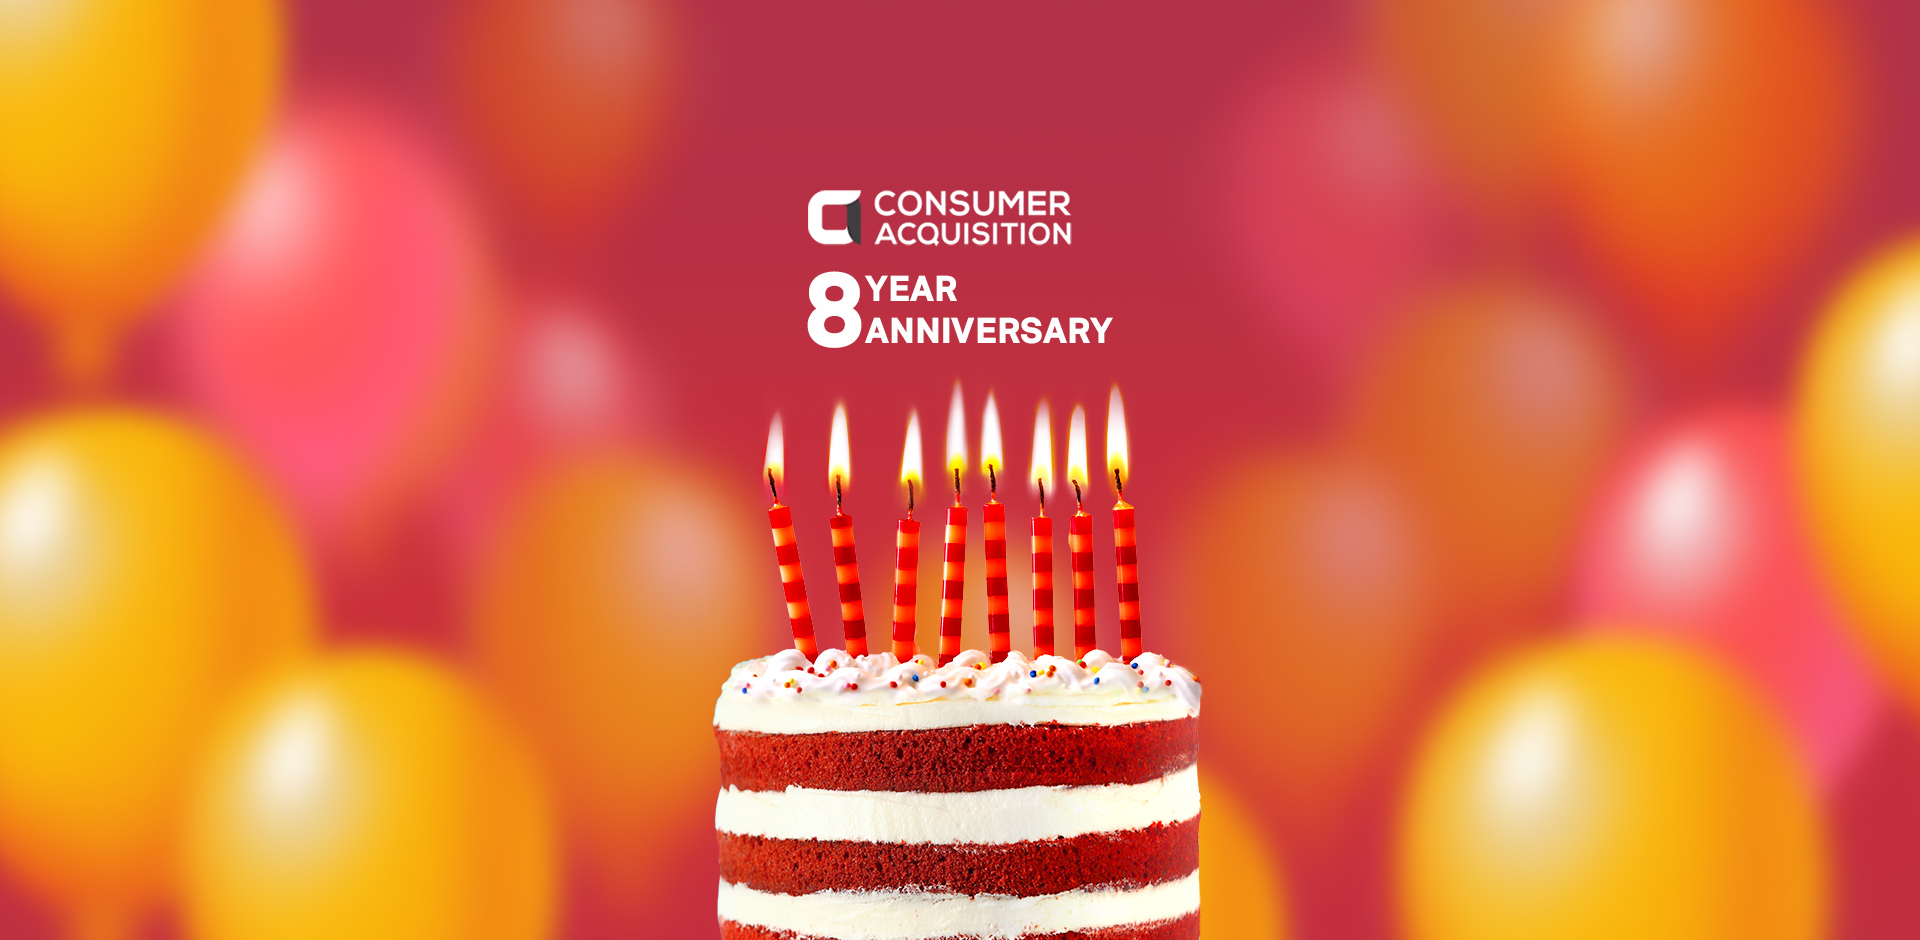 Consumer Acquisition Celebrates Our 8th Anniversary!